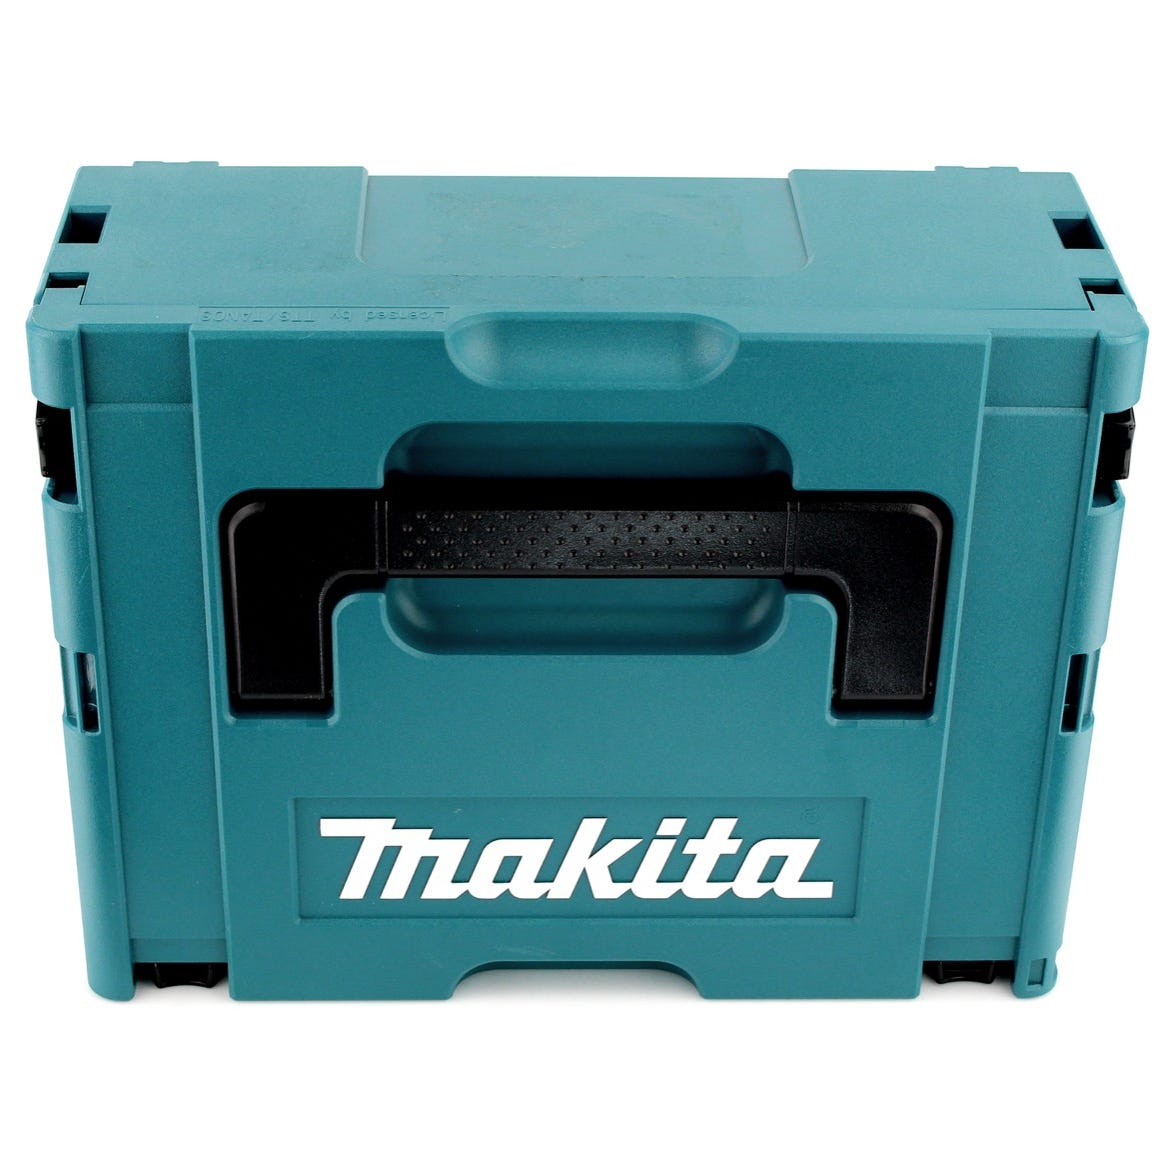 Makita DJV 182 RG1J Scie sauteuse sans fil 18V Brushless + 1x Batterie 5,0Ah + Chargeur + Coffret 2